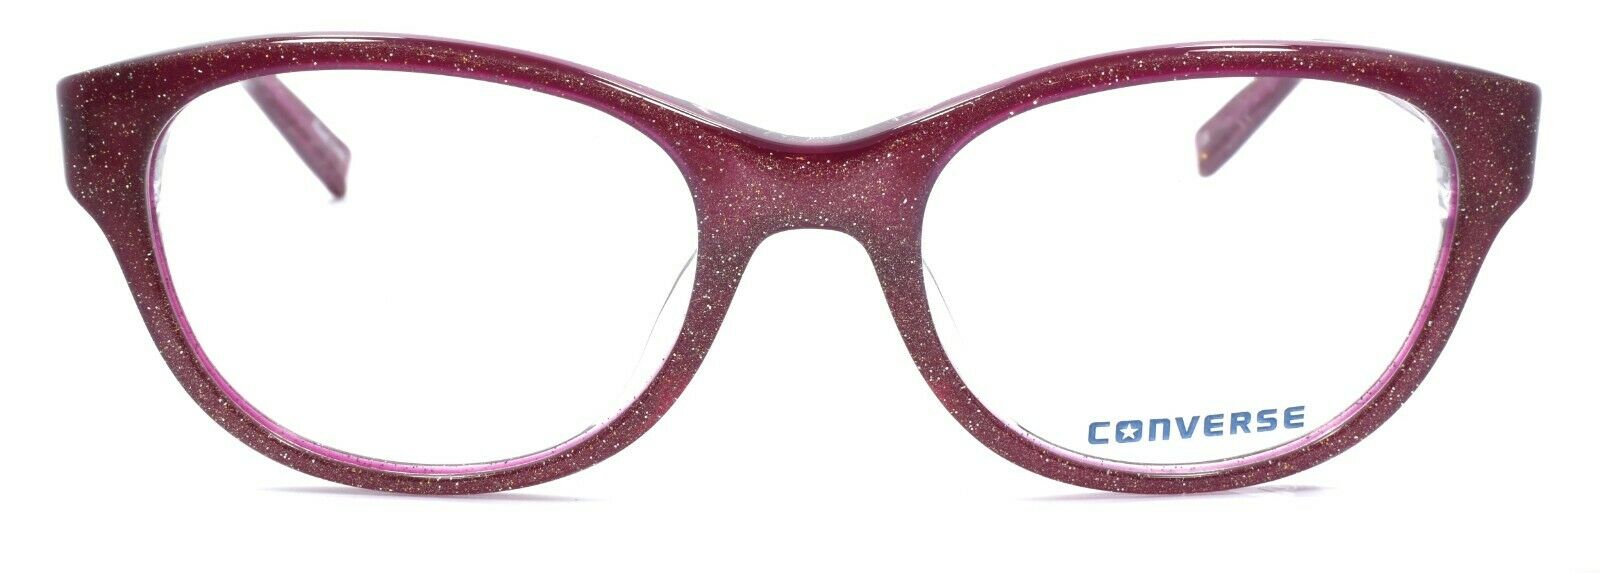 2-CONVERSE Q404 Women's Eyeglasses Frames 52-19-140 Burgundy w/ Glitter + CASE-751286304909-IKSpecs